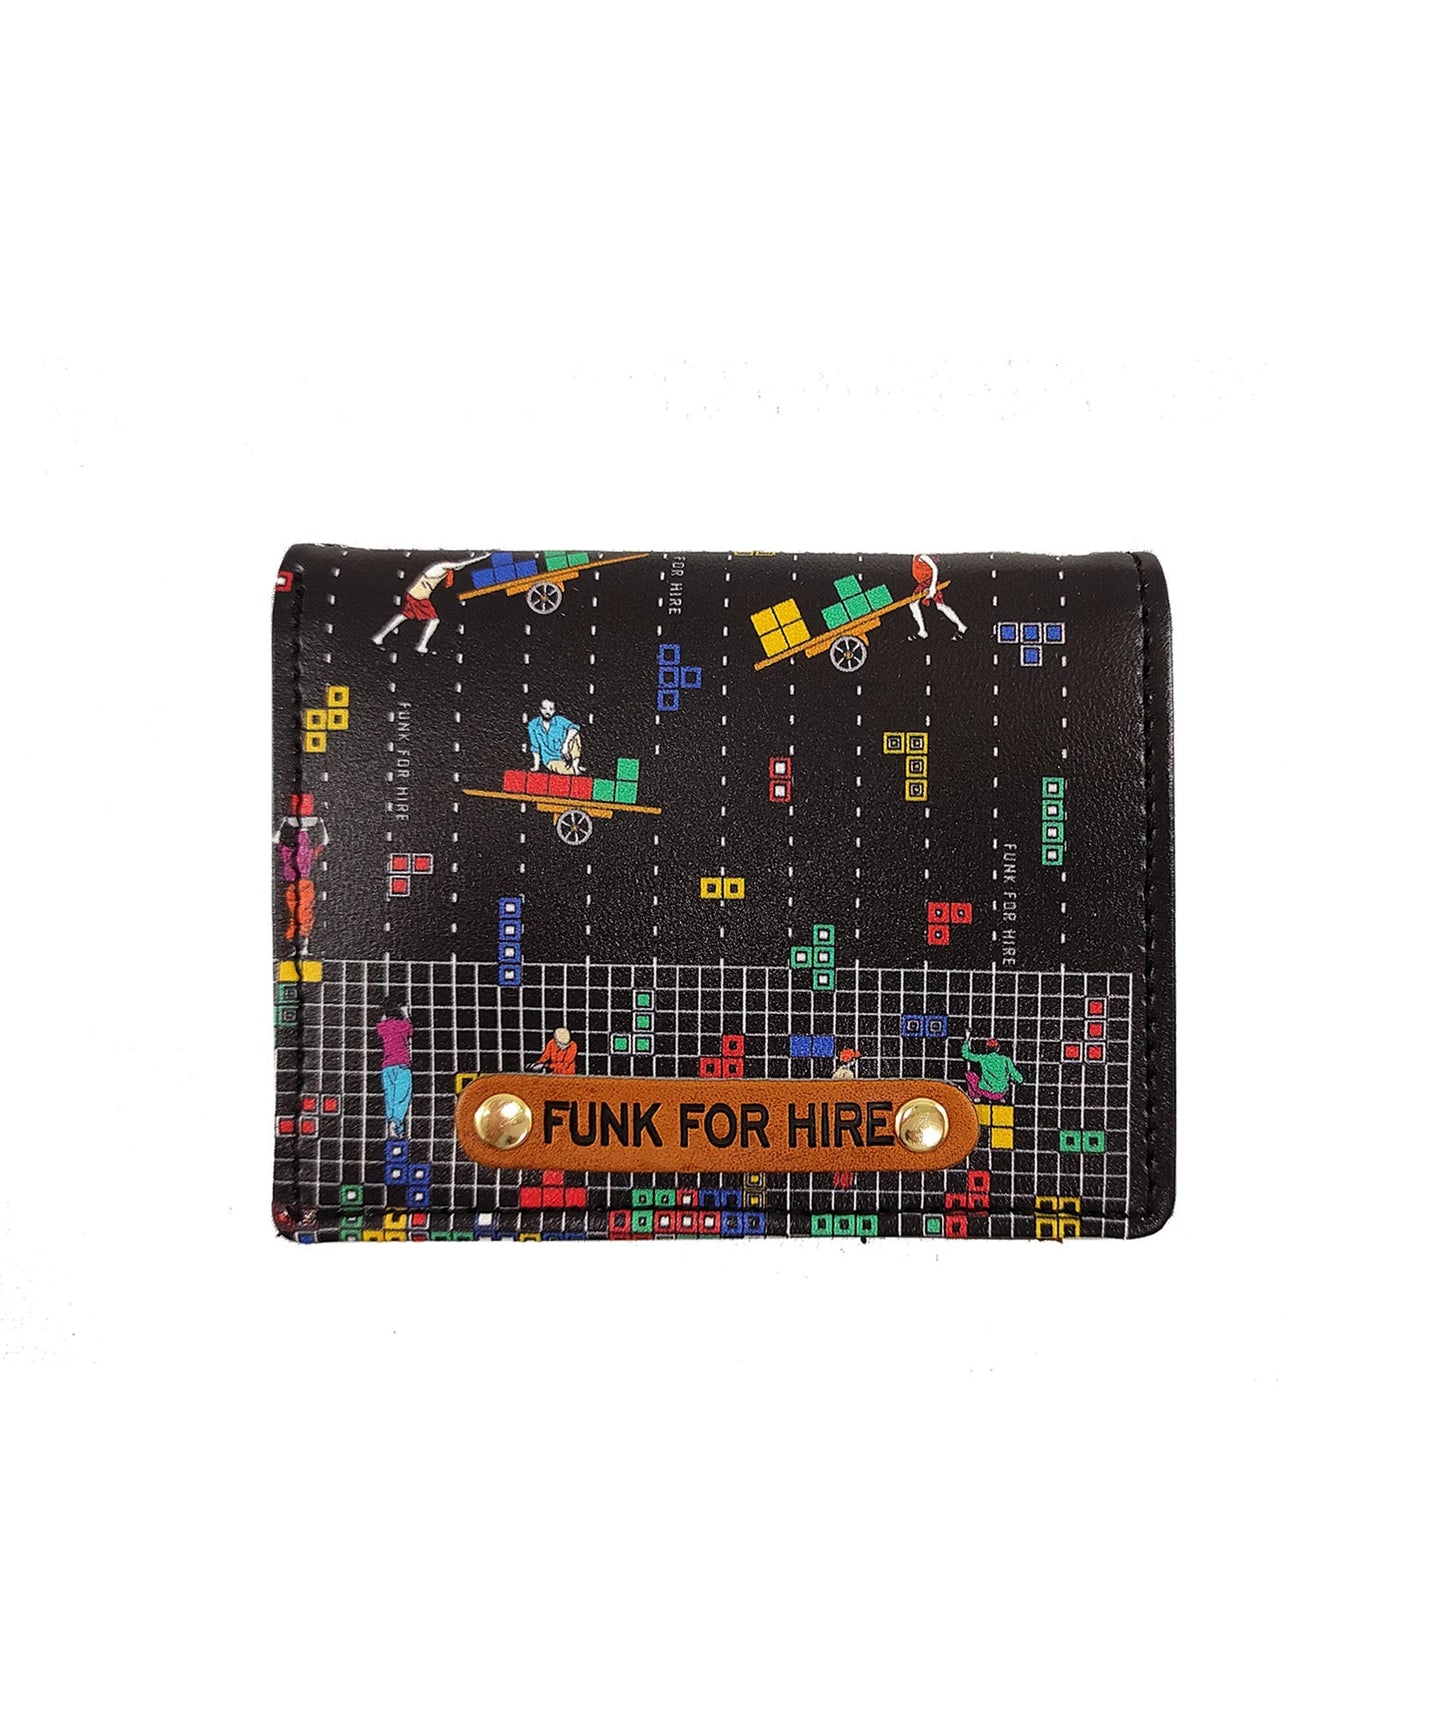 Garage Sale : Tetris Pocket Black Wallet - 26